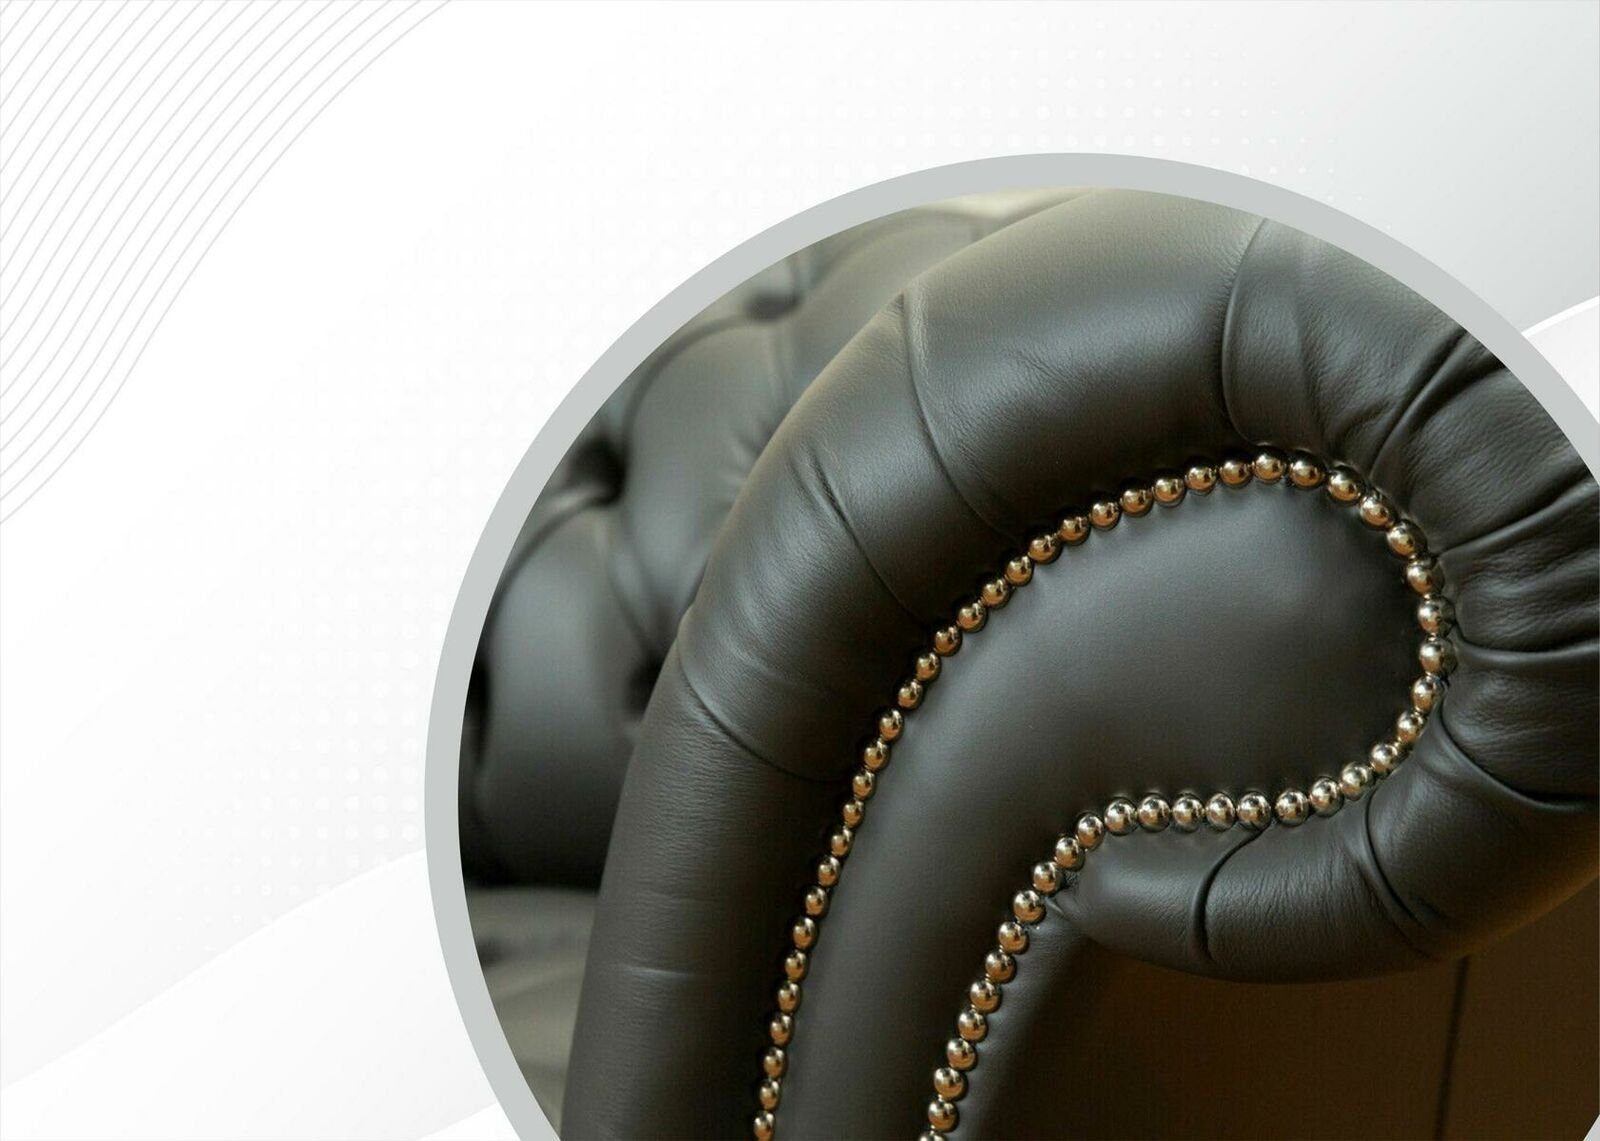 JVmoebel Design Chesterfield-Sofa, Dunkelgrau Couchen big 4 Chesterfield xxl Möbel Leder Modern Sofa Sitzer